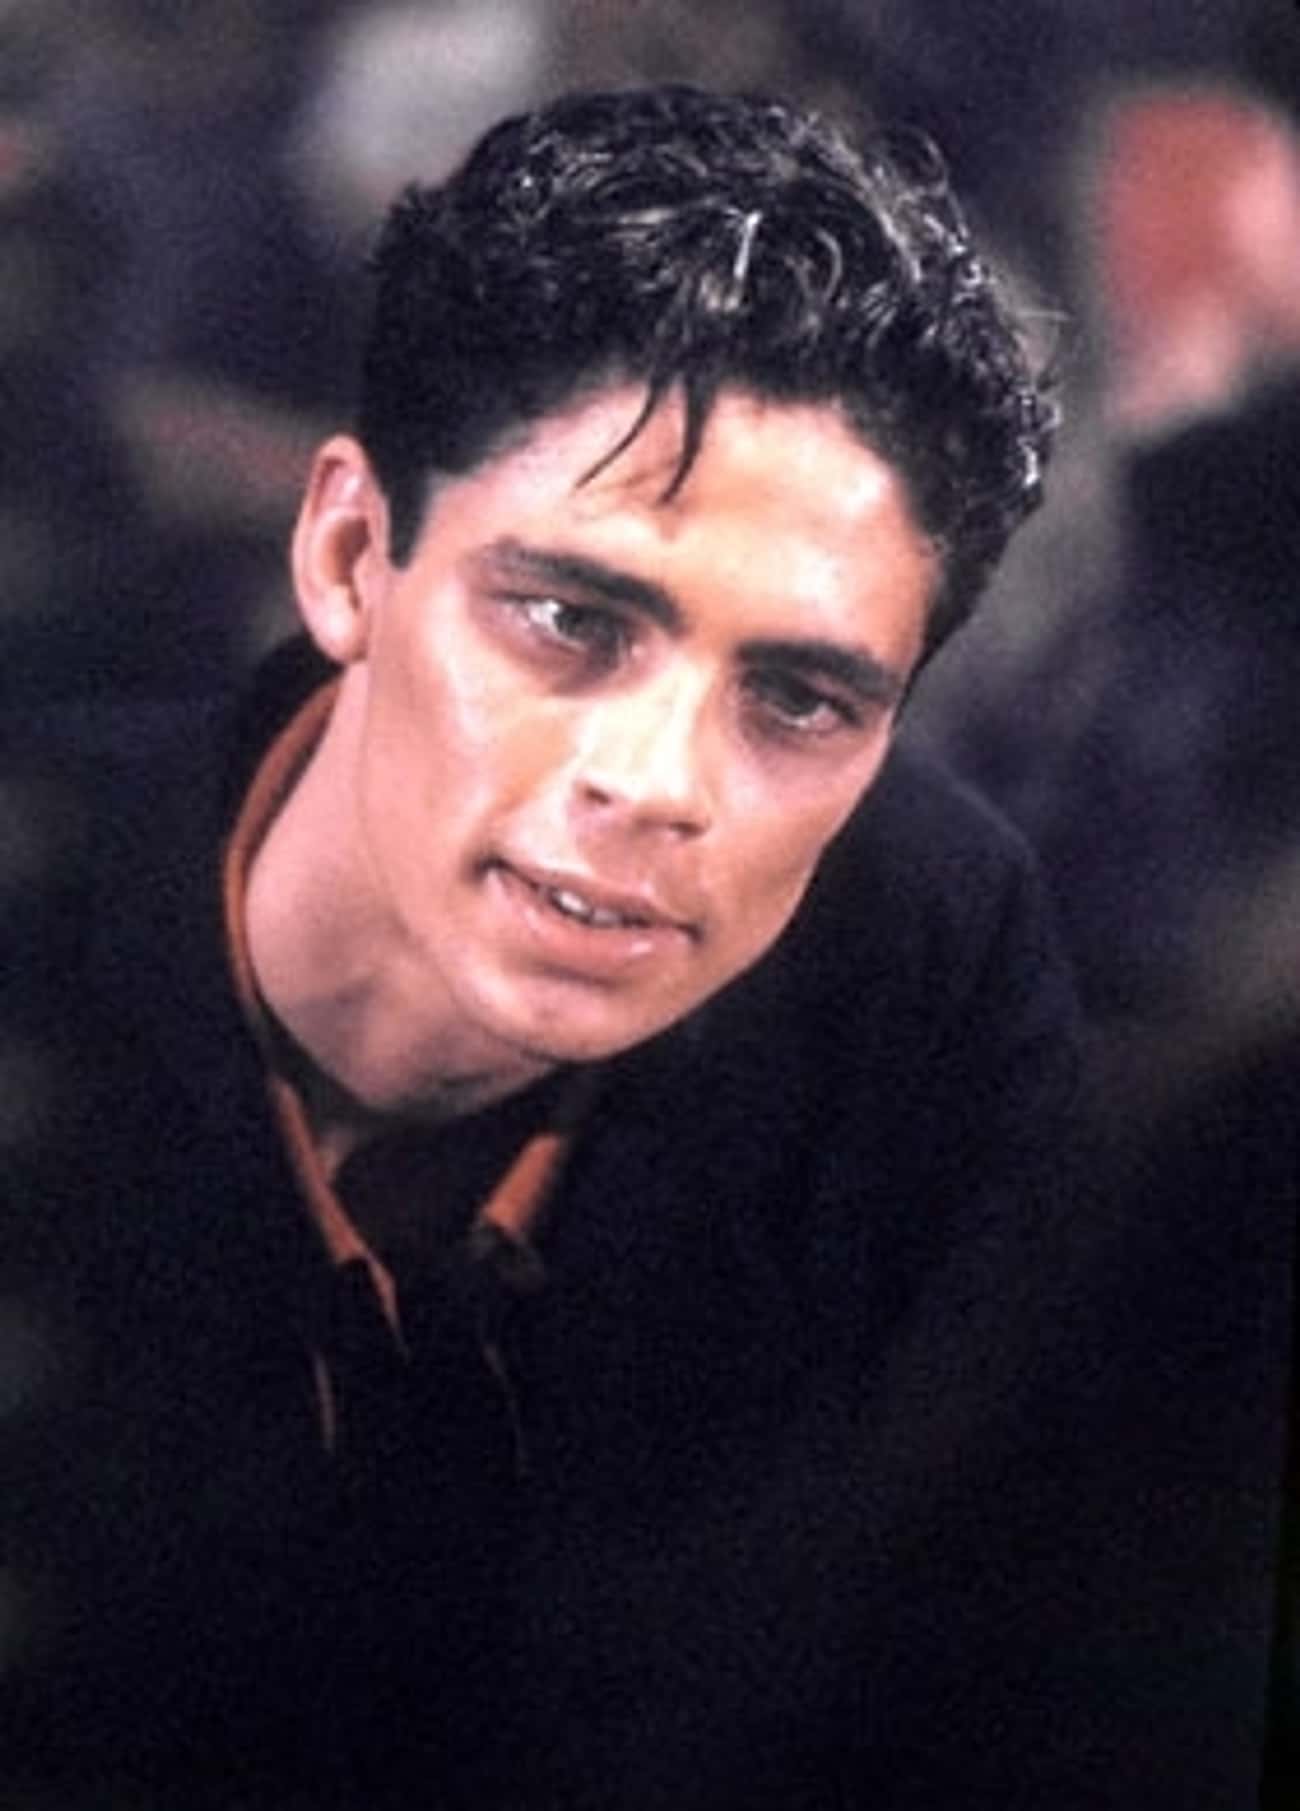 Young Benicio Del Toro in Sports Coat Semi-Closeup Shot